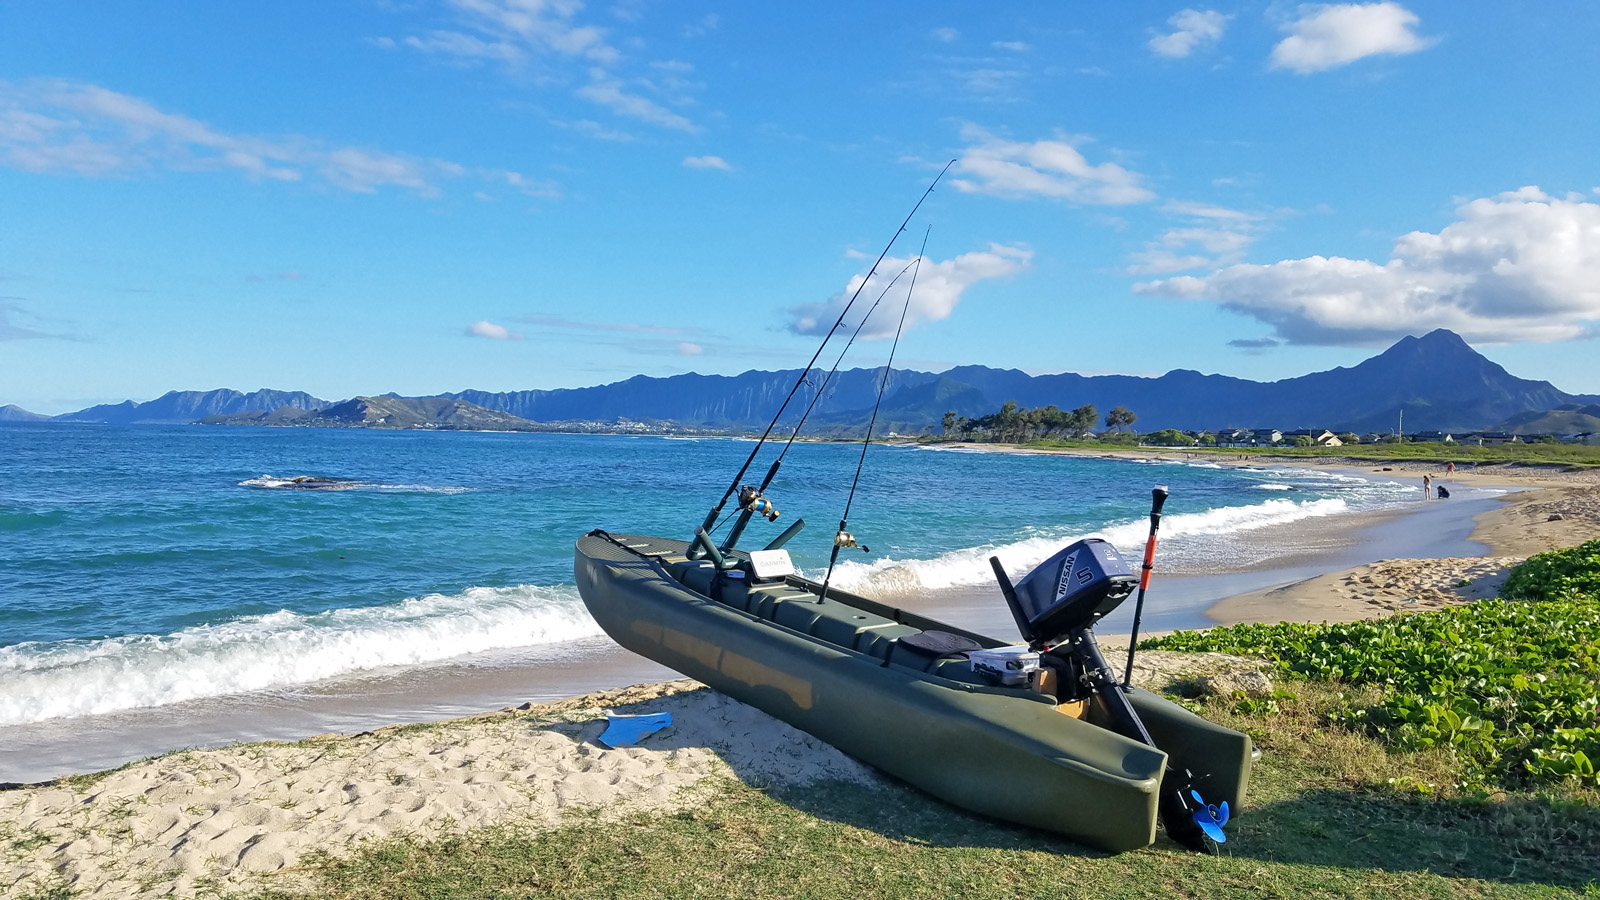 S4 motor kayak beached in Hawaii